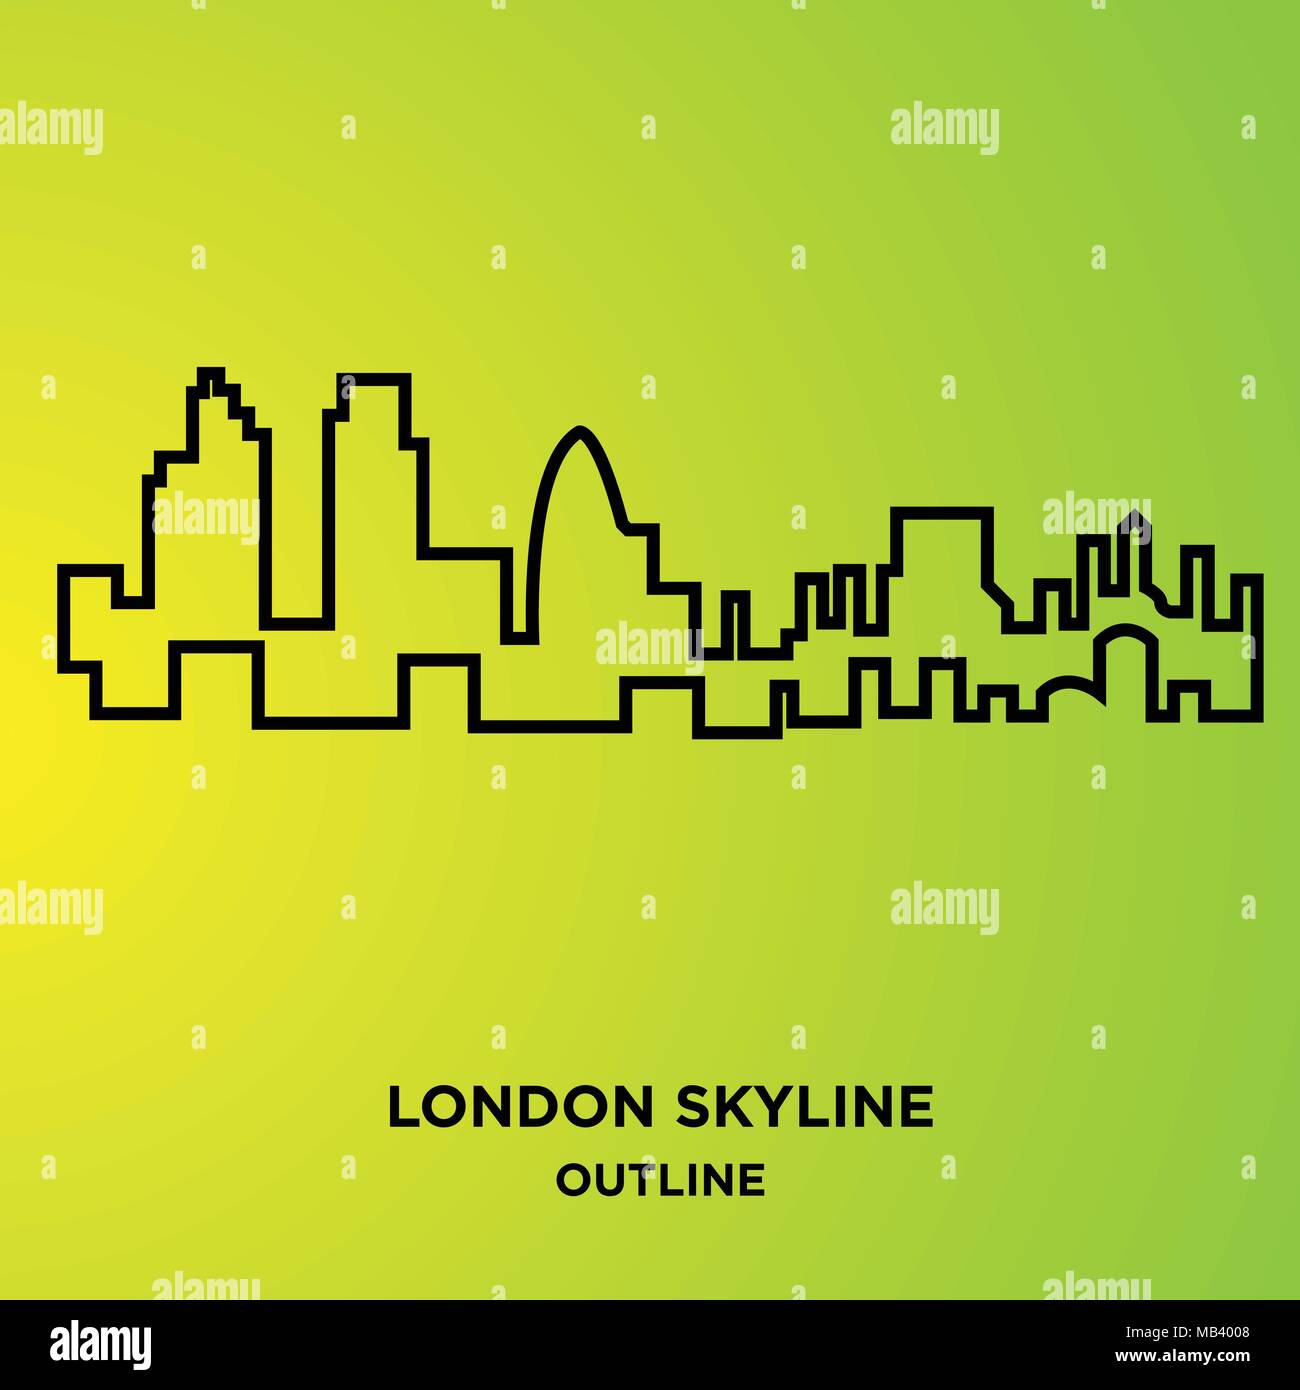 london skyline outline on green background Stock Vector